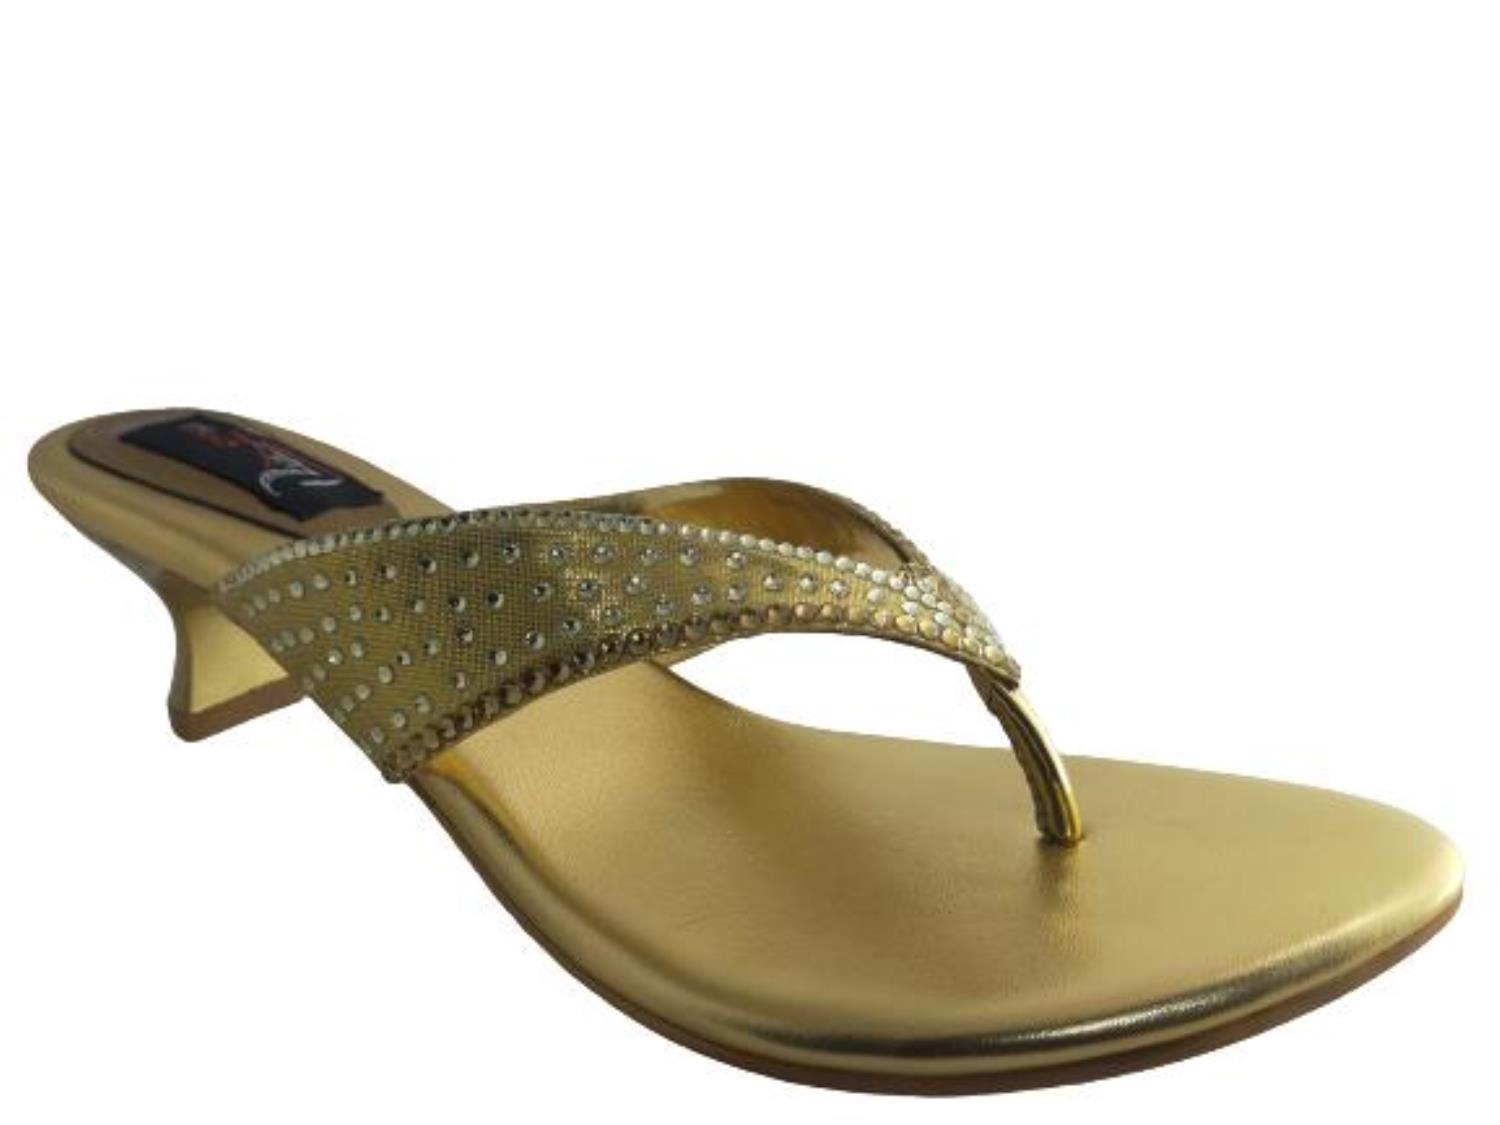 Raja Shoes Brands Women's SH-4801 Partywear Wedding Heels Chappal ...